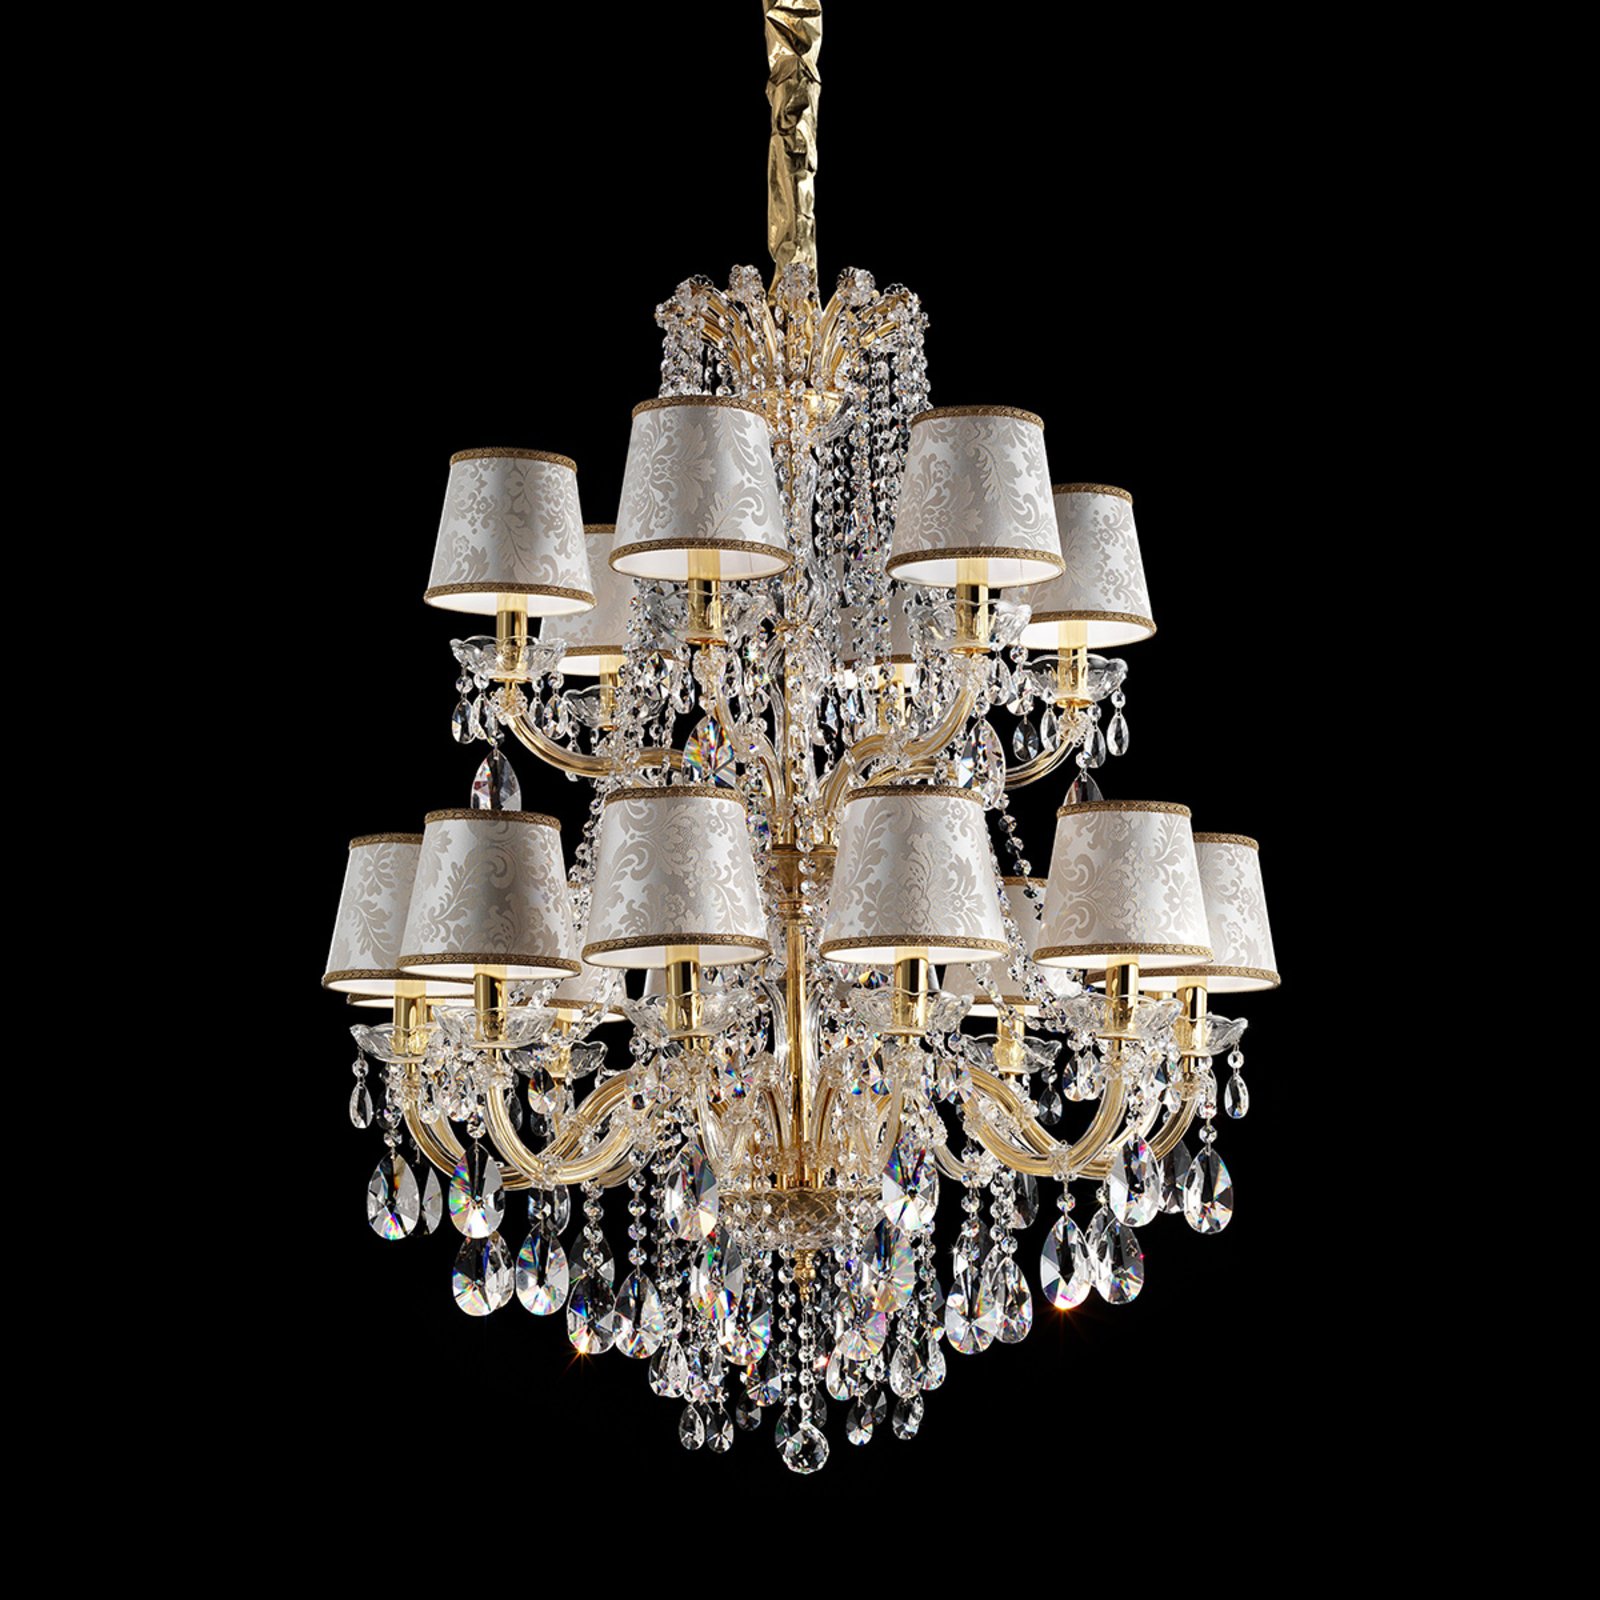 Marianna gold-plate chandelier